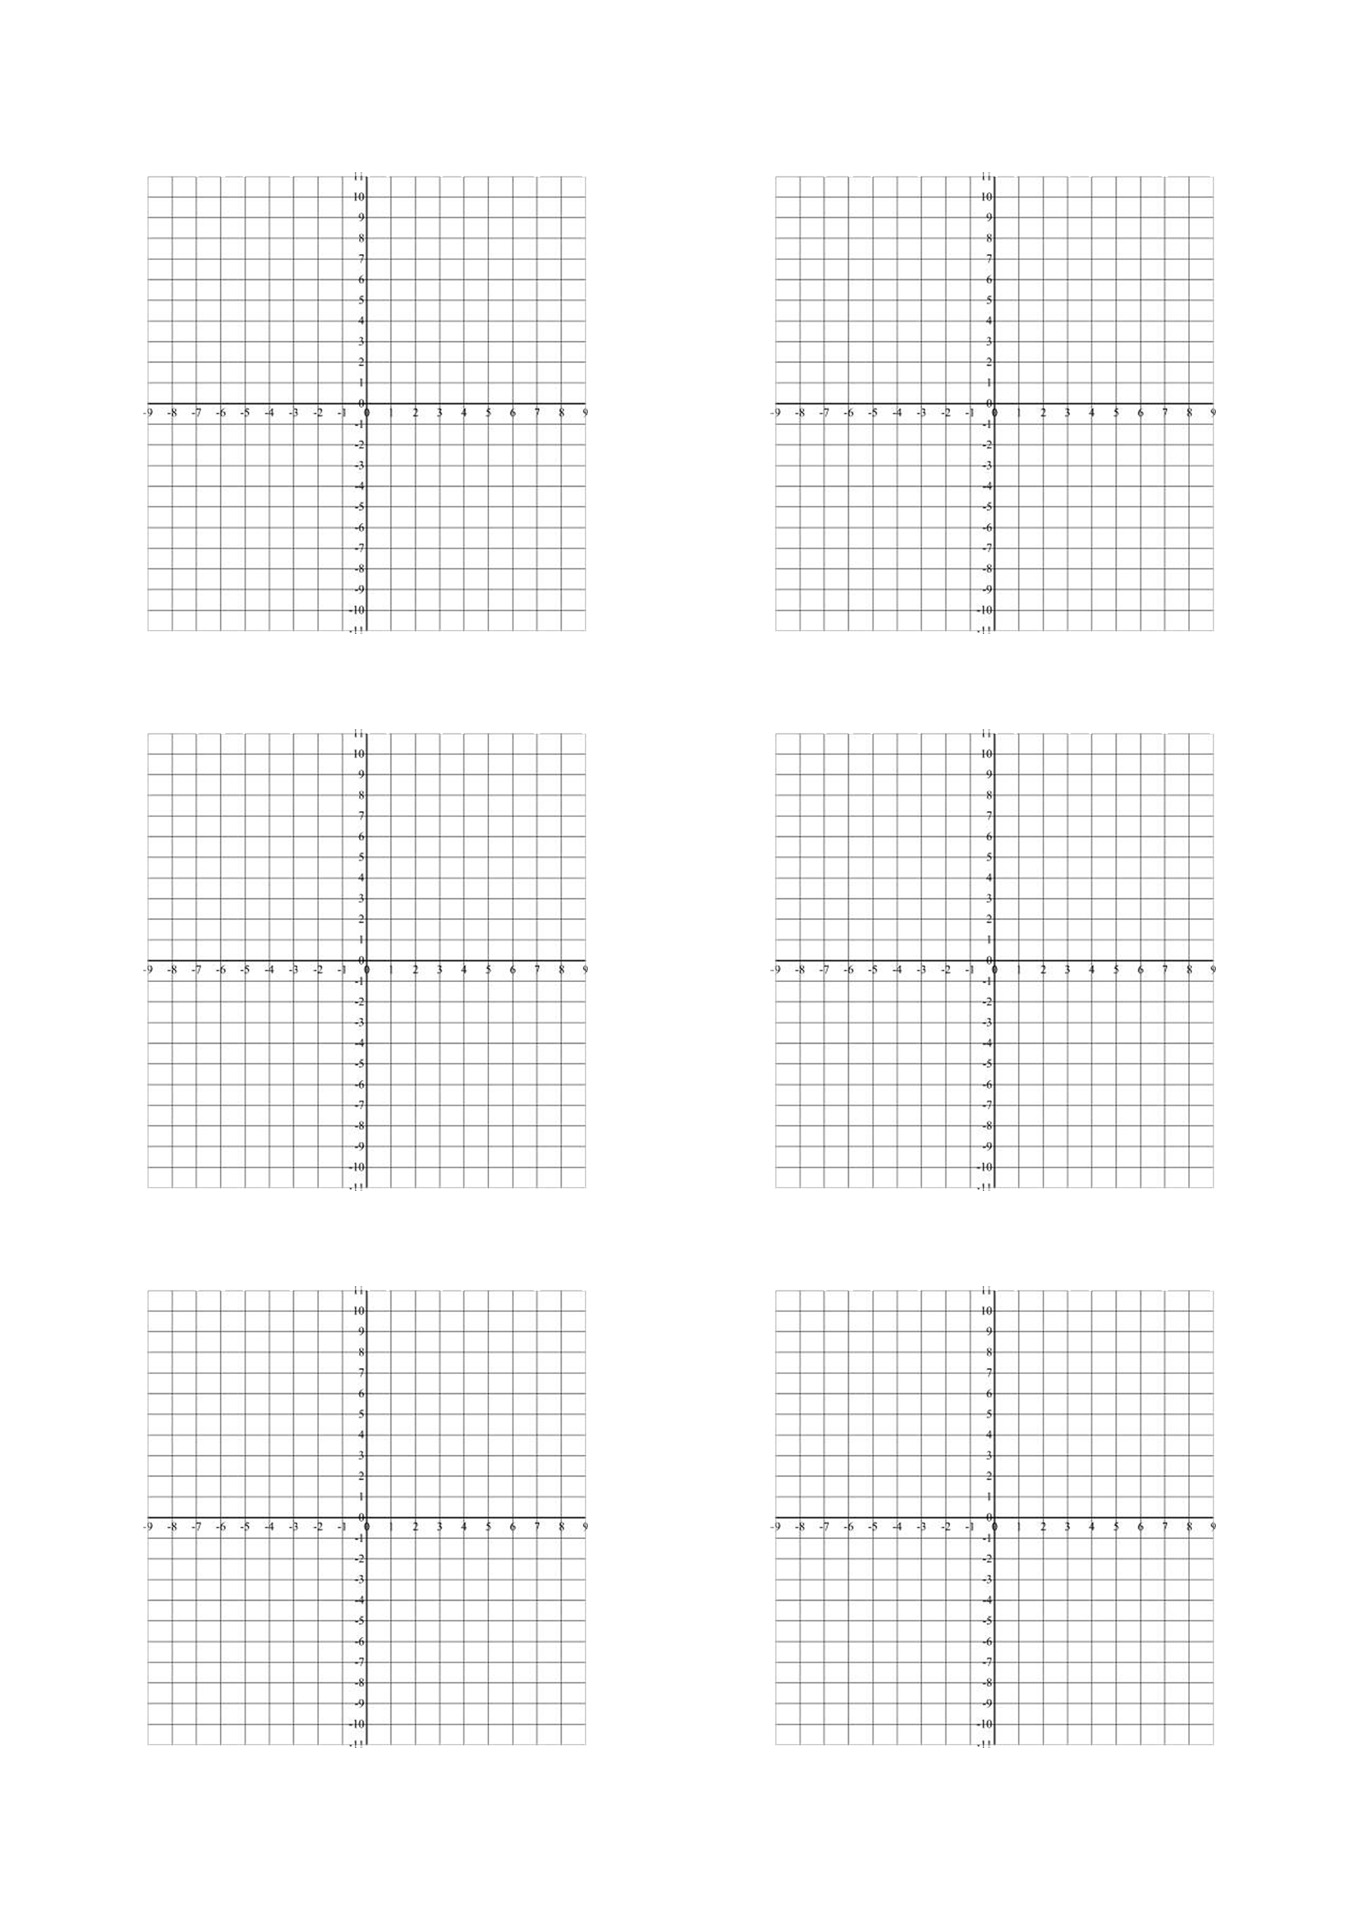 9-best-images-of-free-coordinate-grid-worksheets-worksheeto